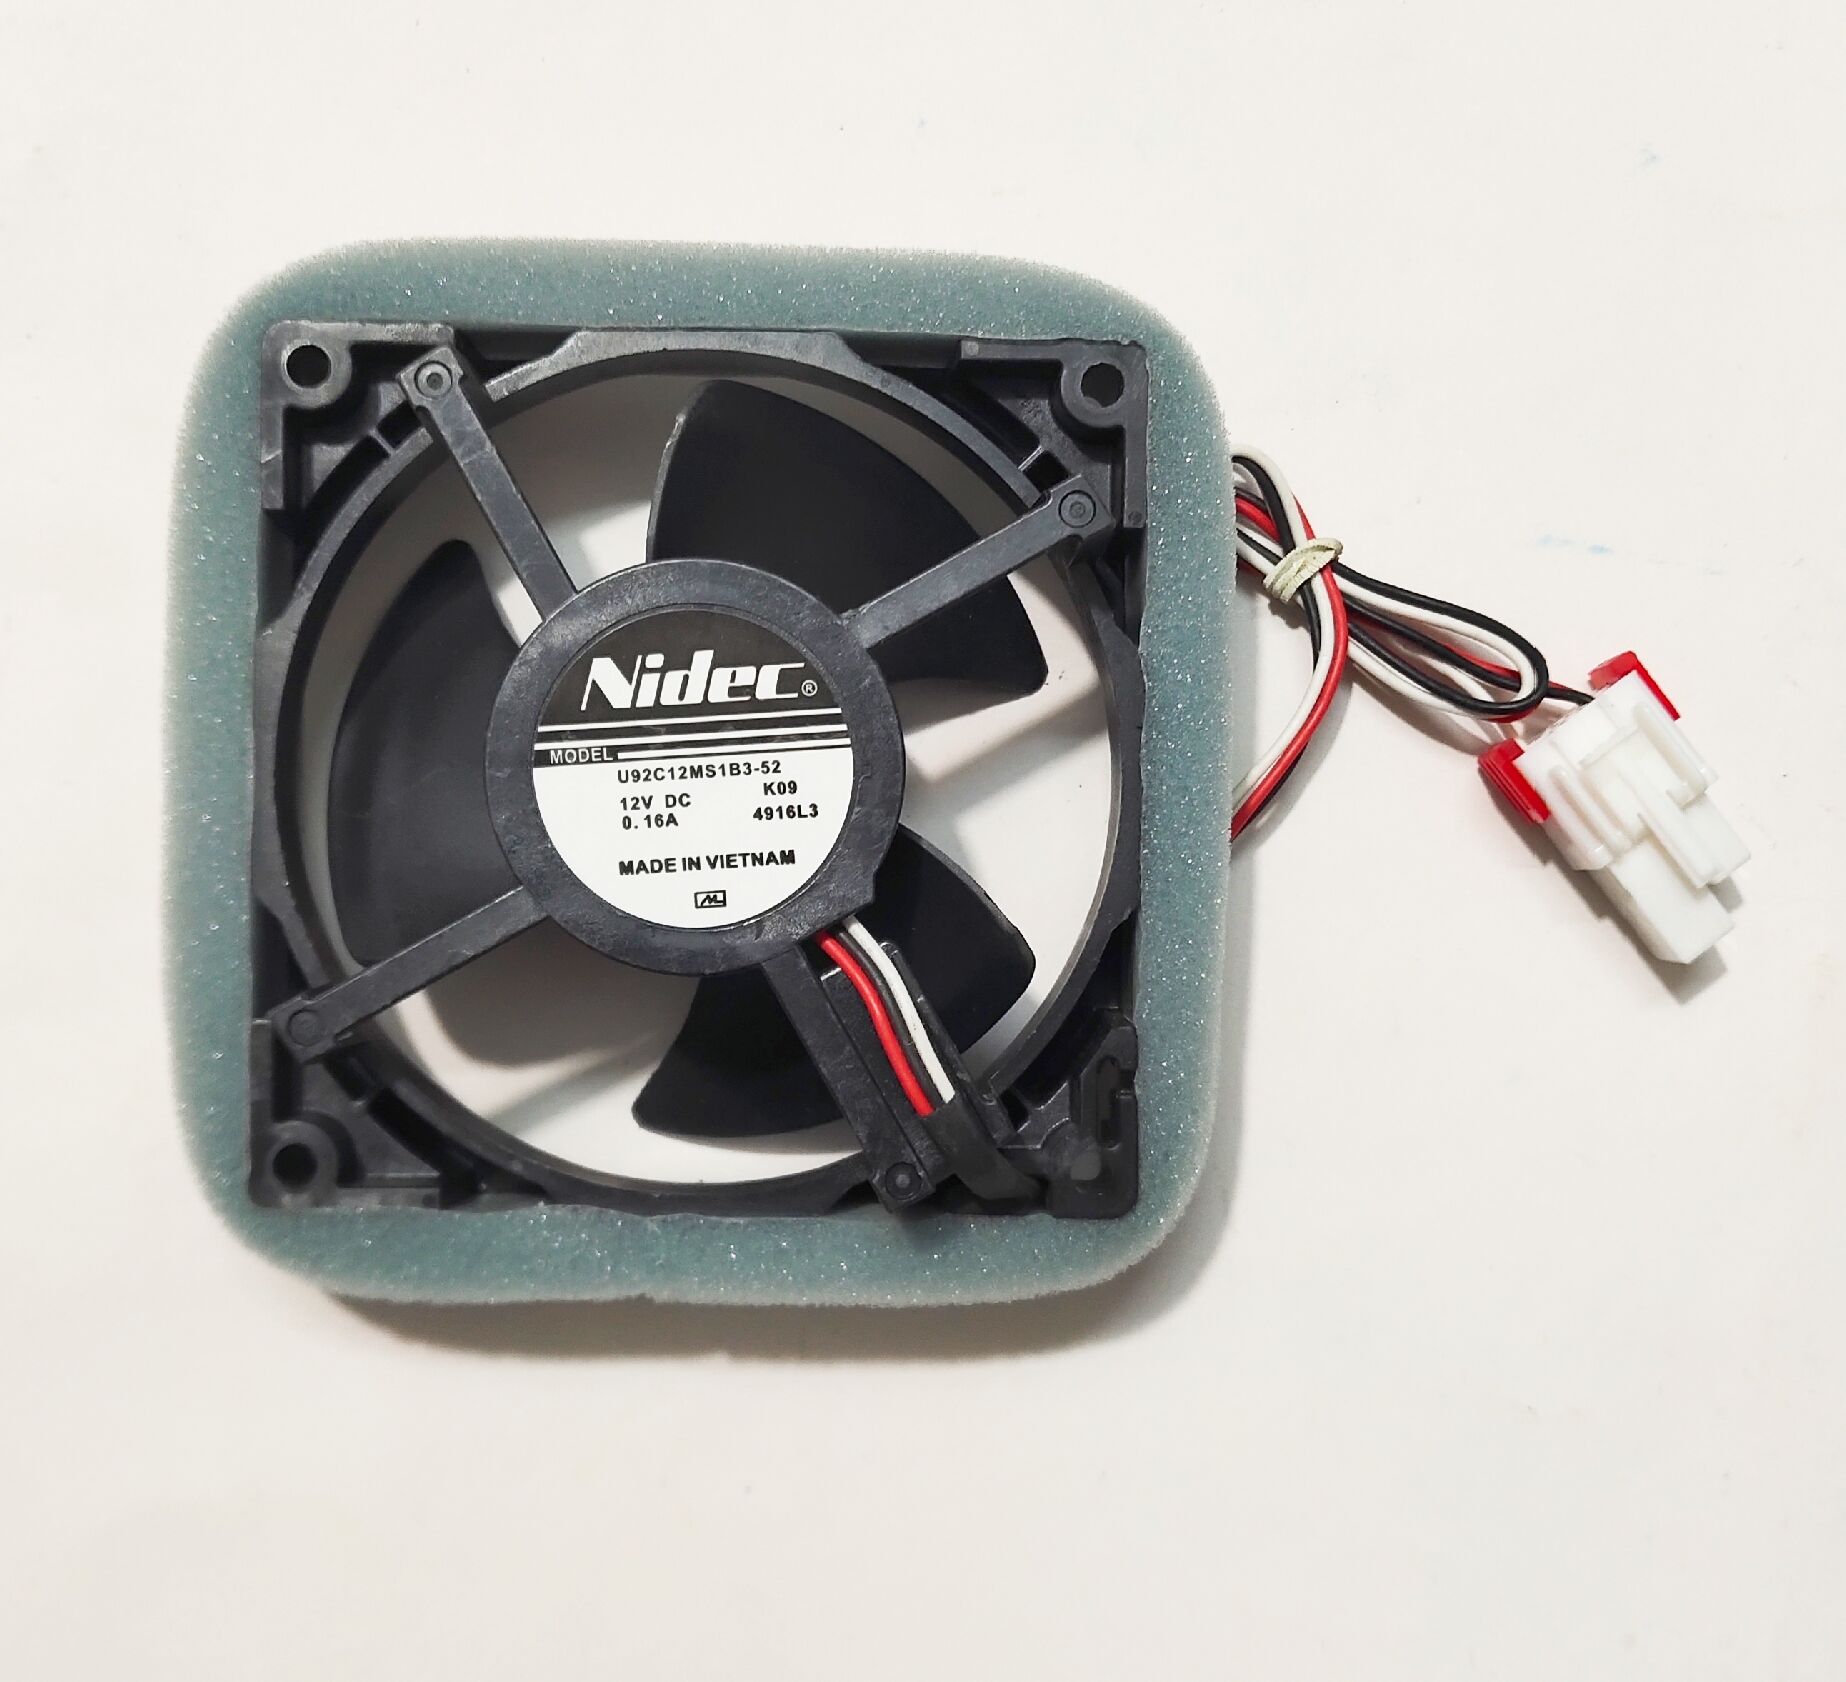 

Refrigerated cooling fan New Original for nidec 9CM U92C12MS1B3-52 12V 0.16A waterproof cooler